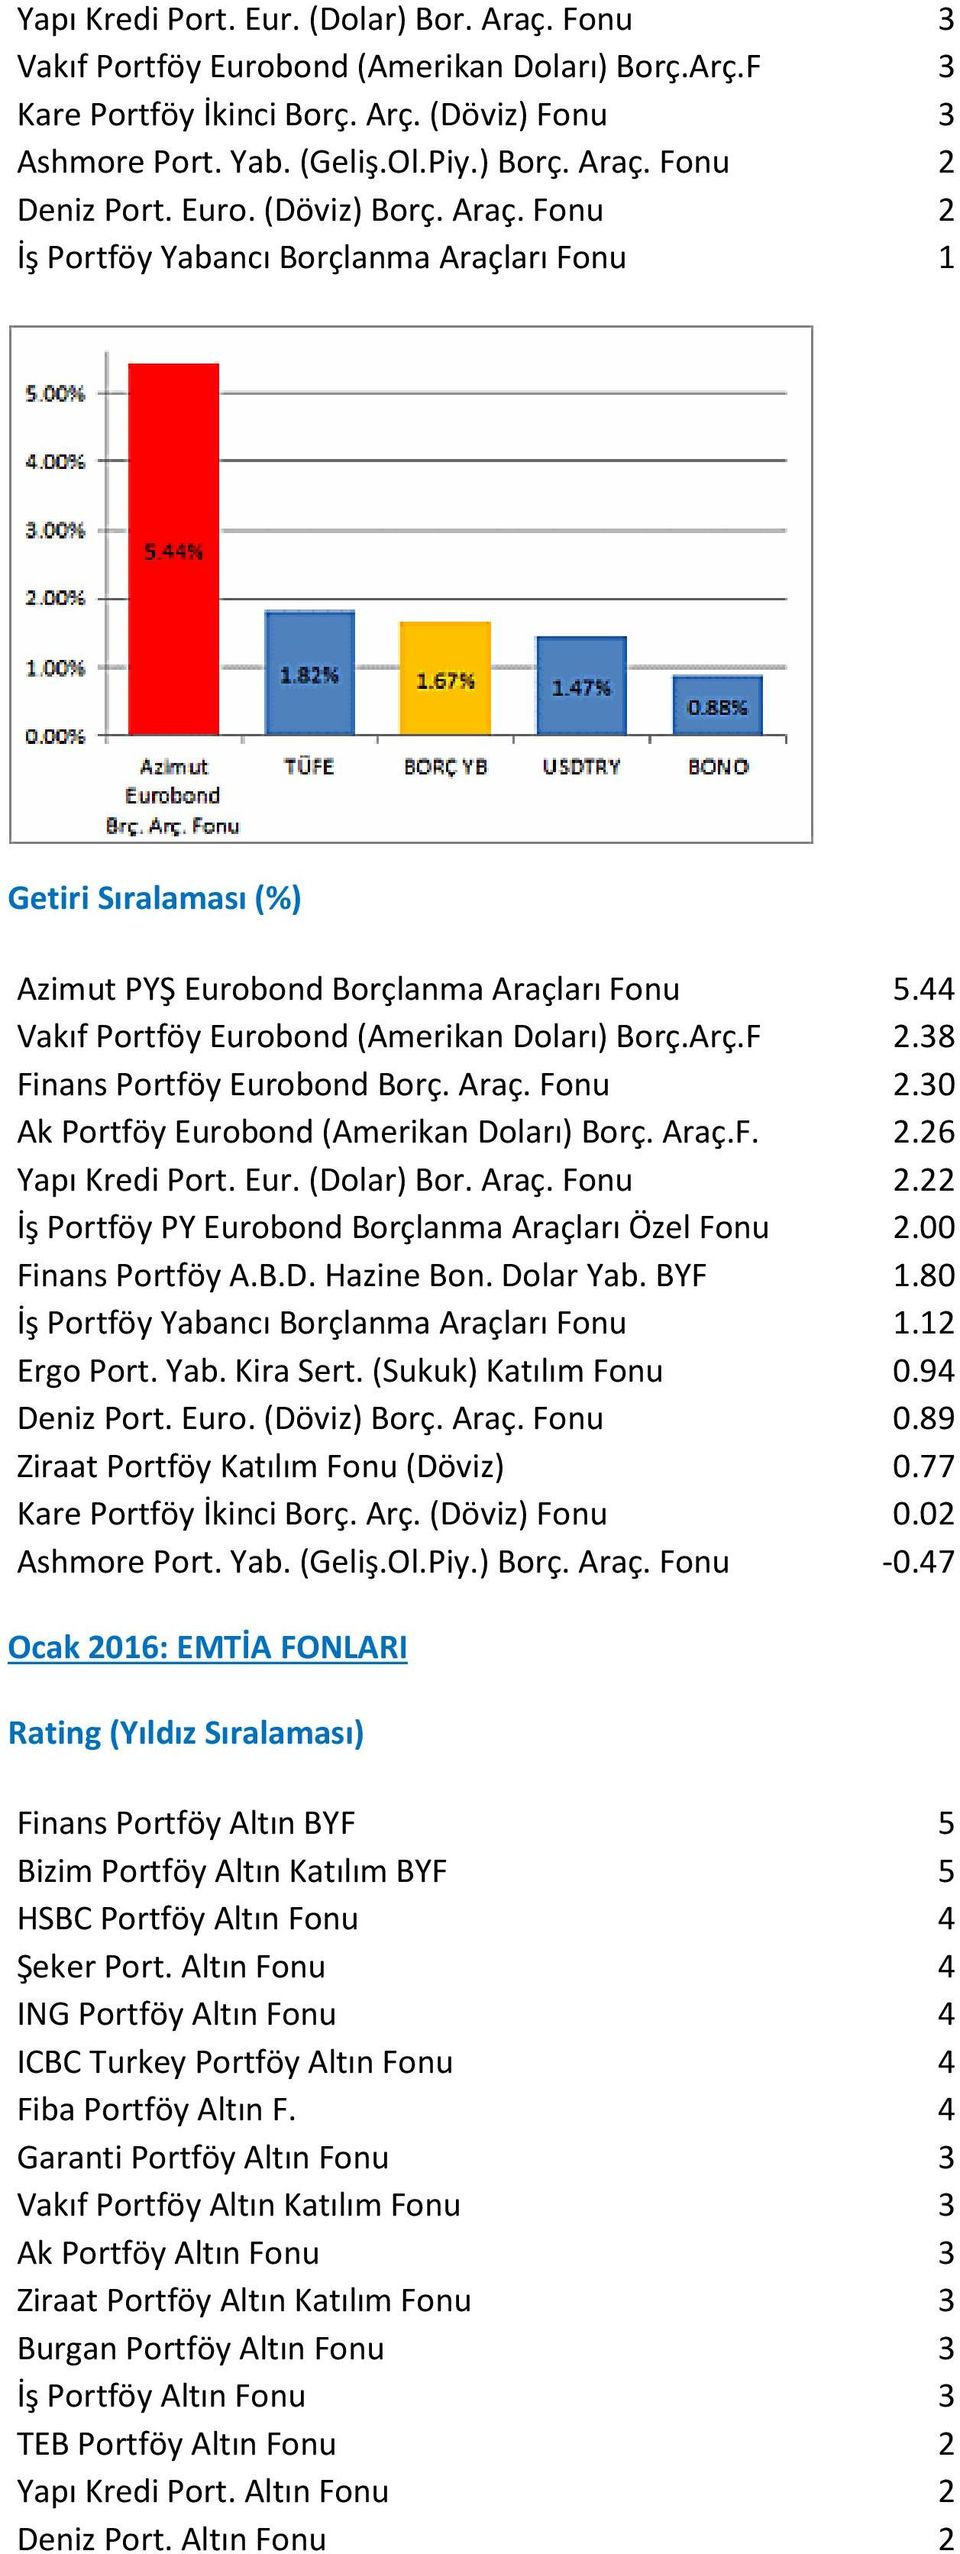 38 Finans Portföy Eurobond Borç. Araç. Fonu 2.30 Ak Portföy Eurobond (Amerikan Doları) Borç. Araç.F. 2.26 Yapı Kredi Port. Eur. (Dolar) Bor. Araç. Fonu 2.22 İş Portföy PY Eurobond Borçlanma Araçları Özel Fonu 2.